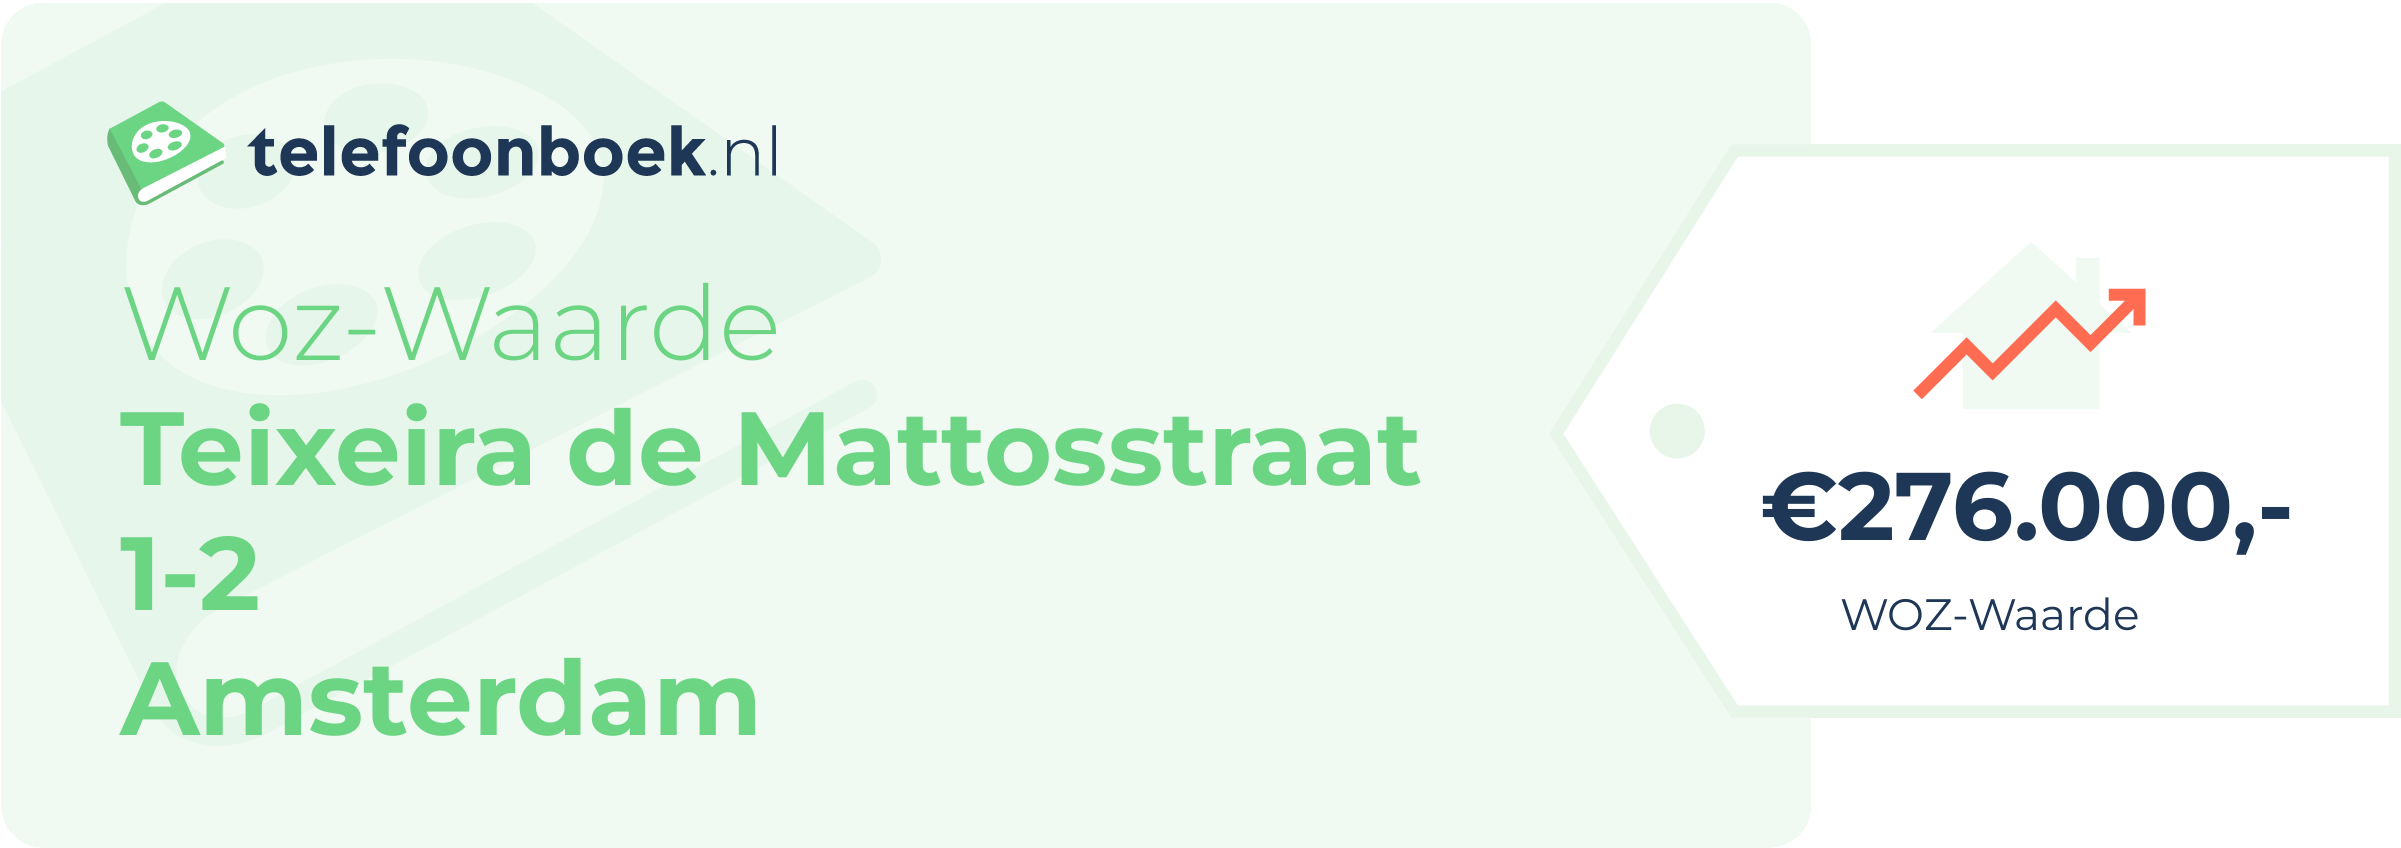 WOZ-waarde Teixeira De Mattosstraat 1-2 Amsterdam